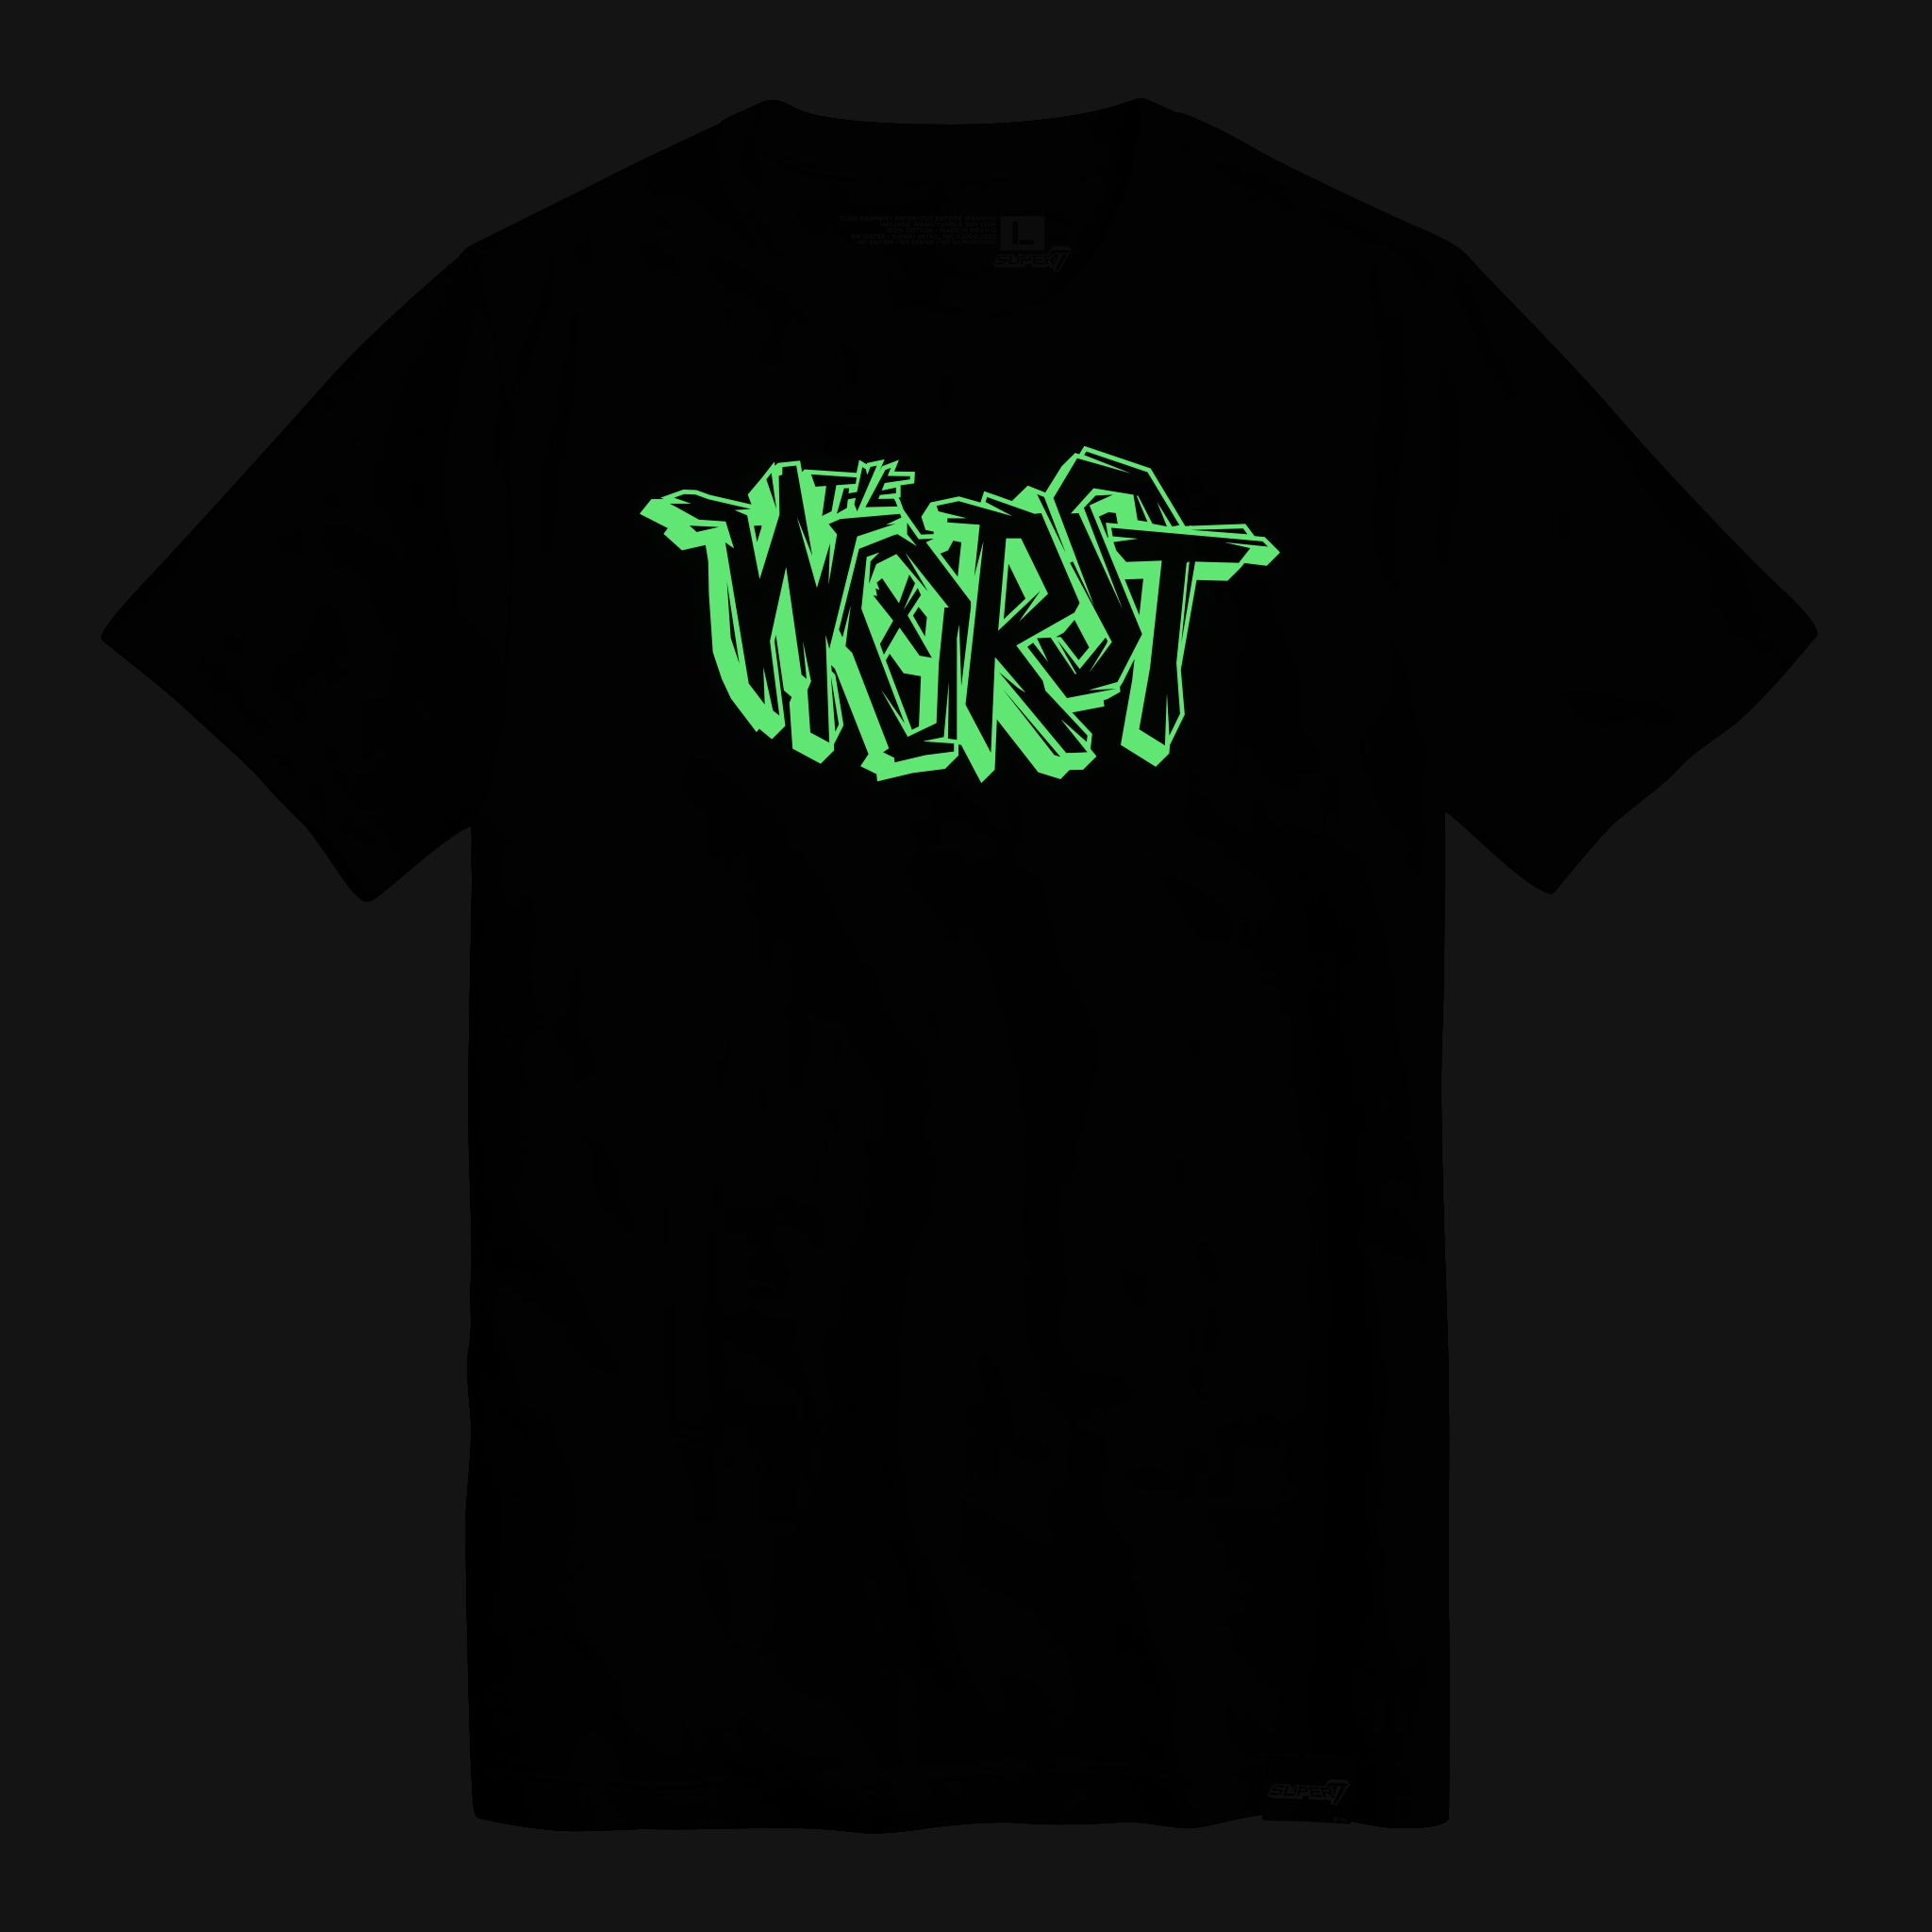 The Worst T-Shirt - Logo (Glow-in-the-Dark)